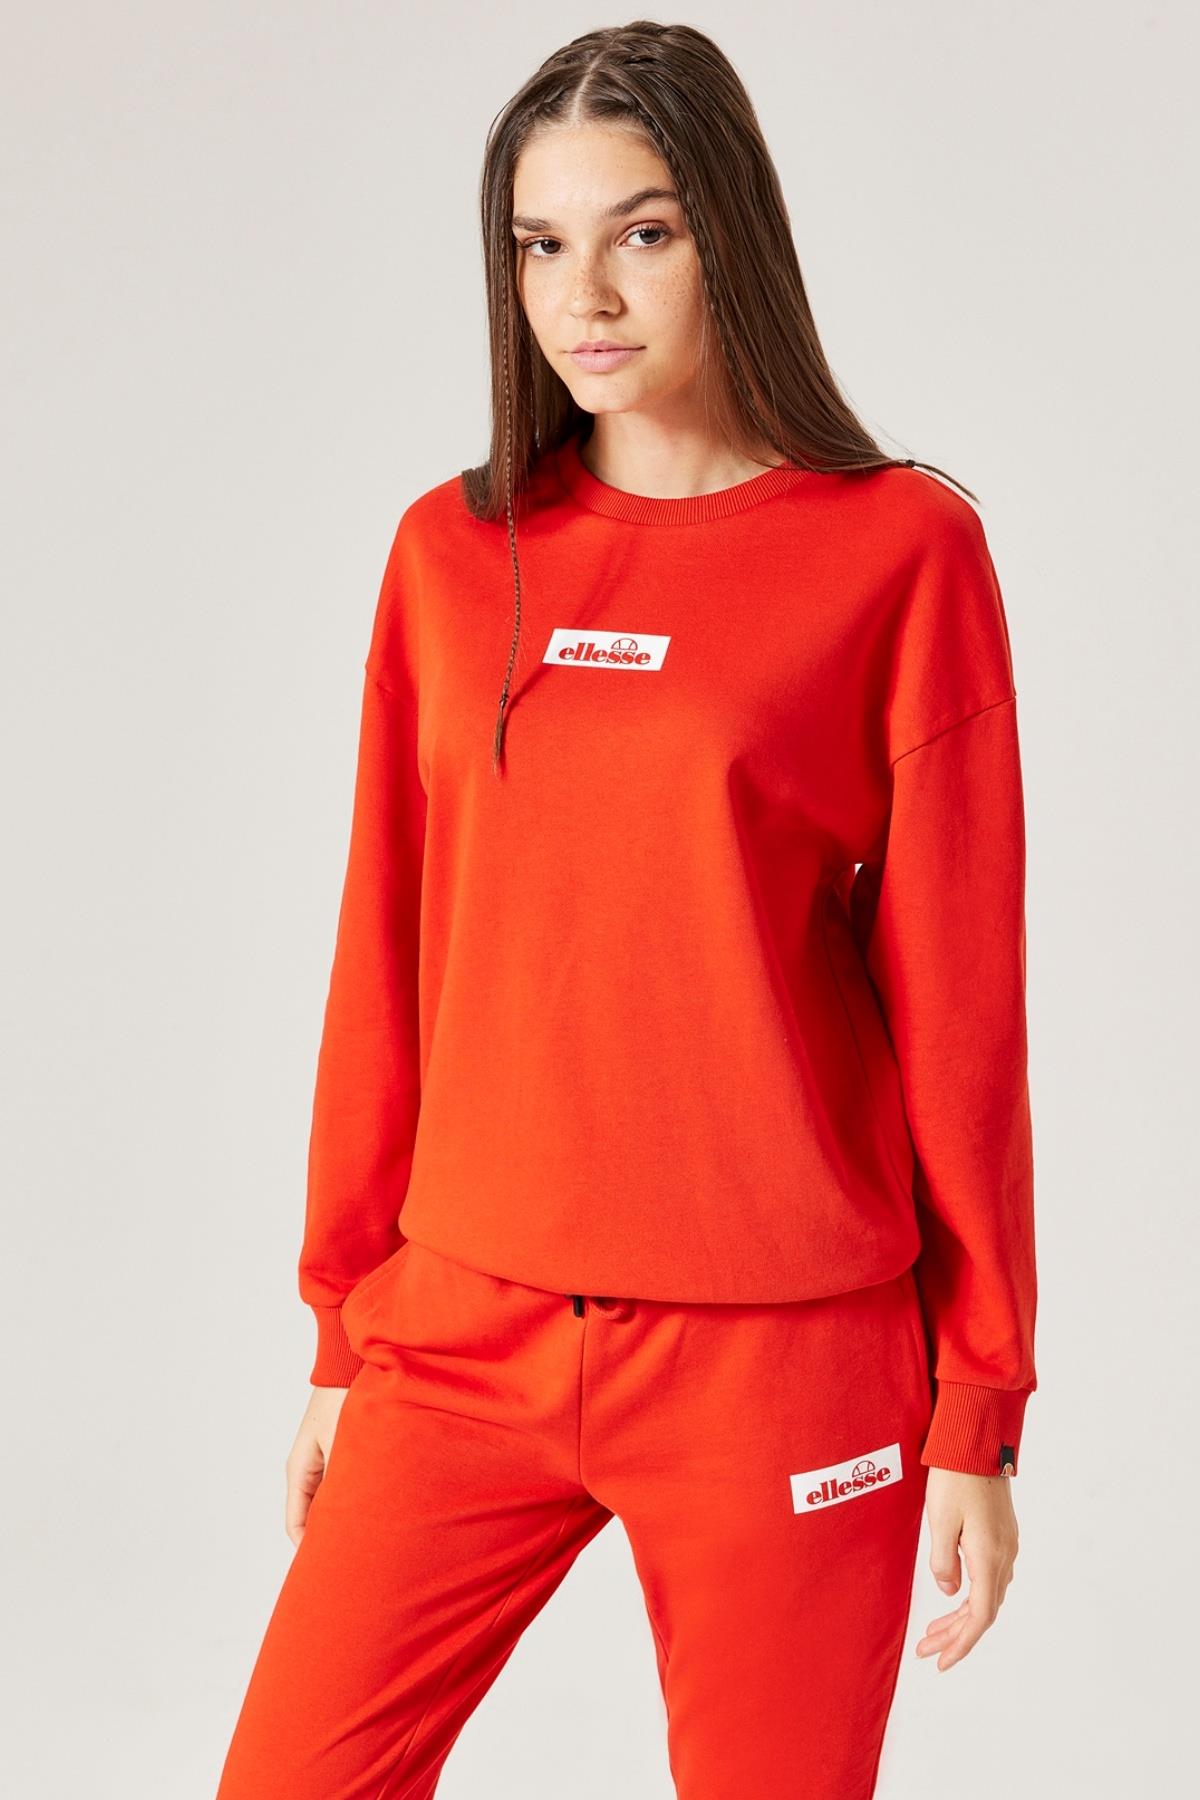 ellesse Kadın Sweatshirt F019-RD